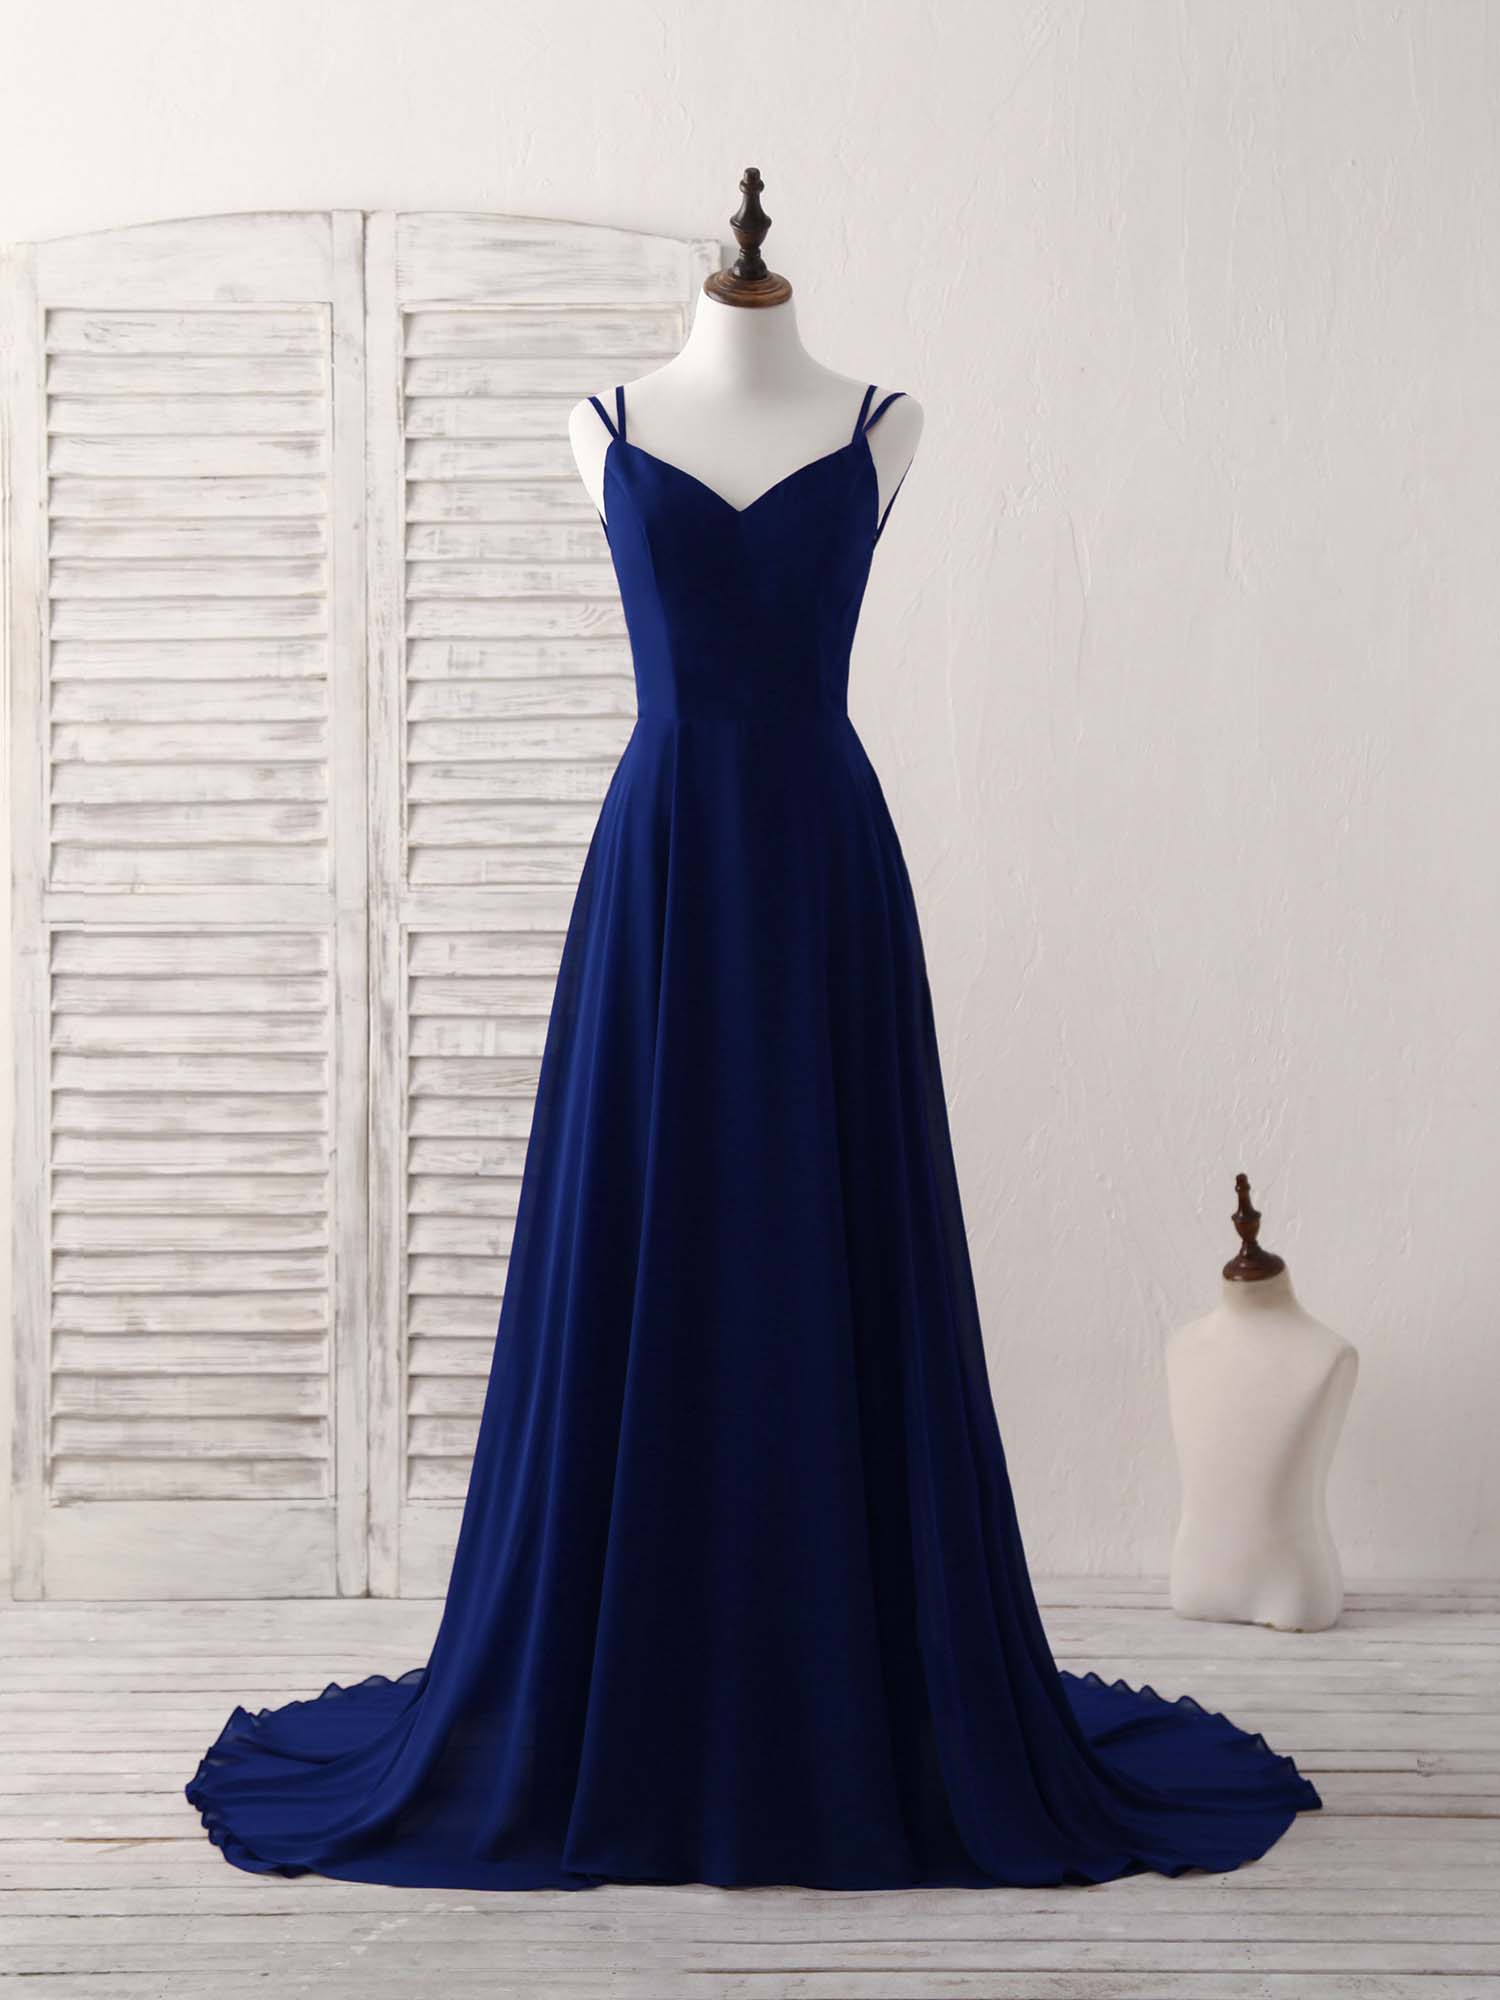 Simple Blue Chiffon Long Corset Prom Dress Backless Blue Evening Dress outfit, Bridesmaid Dresses Wedding